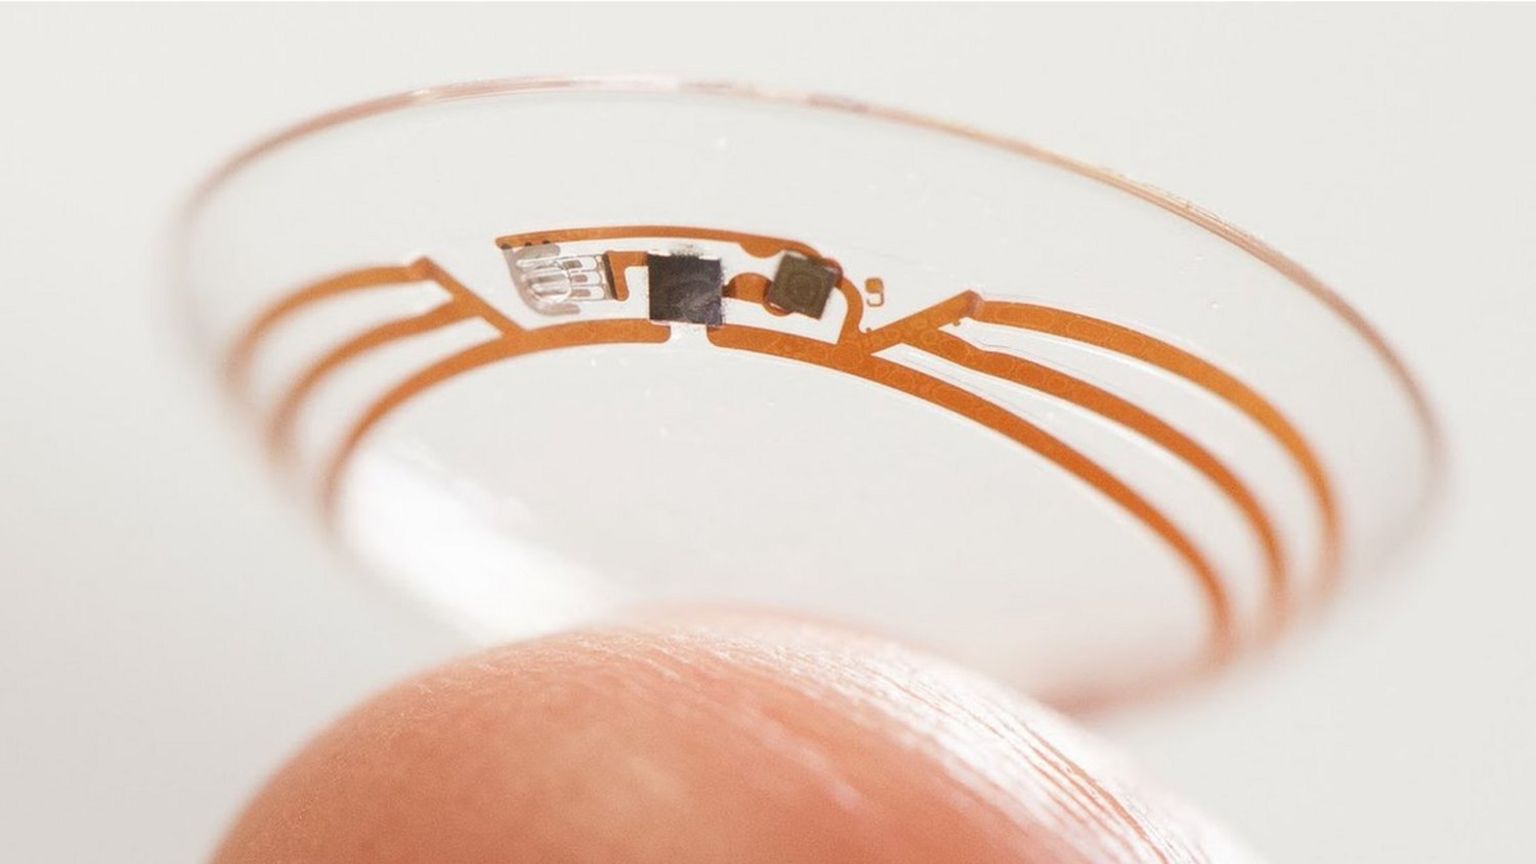 Google's smart contact lens prototype